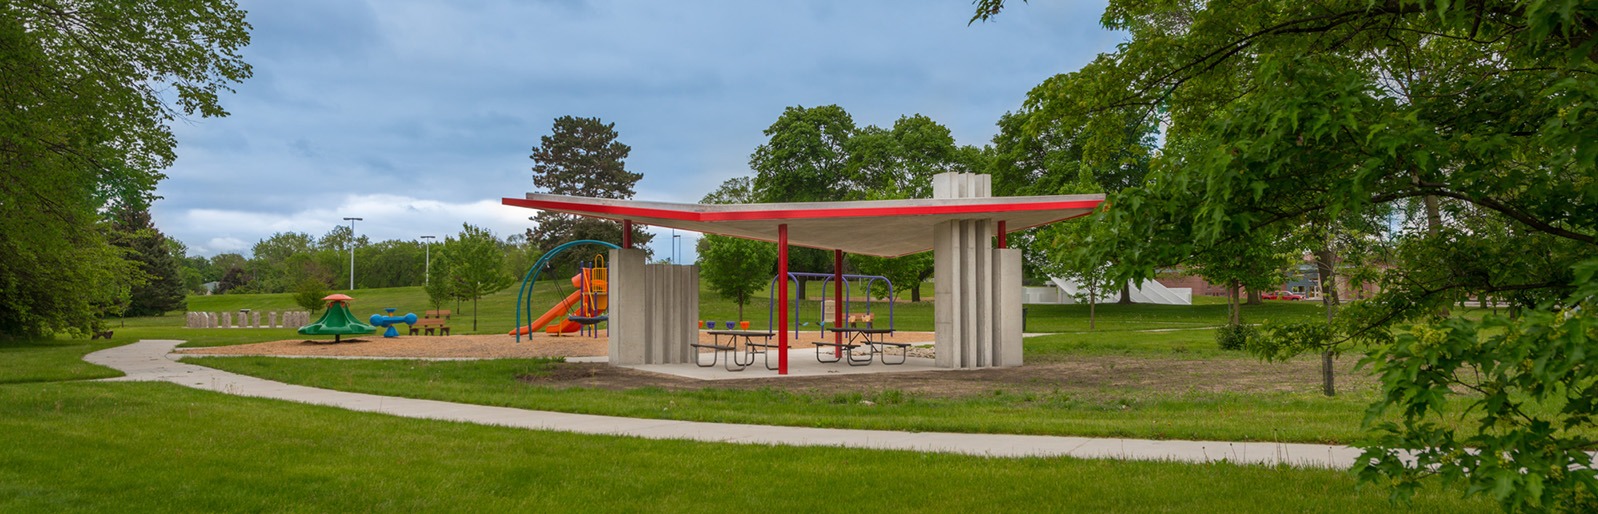 Pavilion at Midland's Central Park